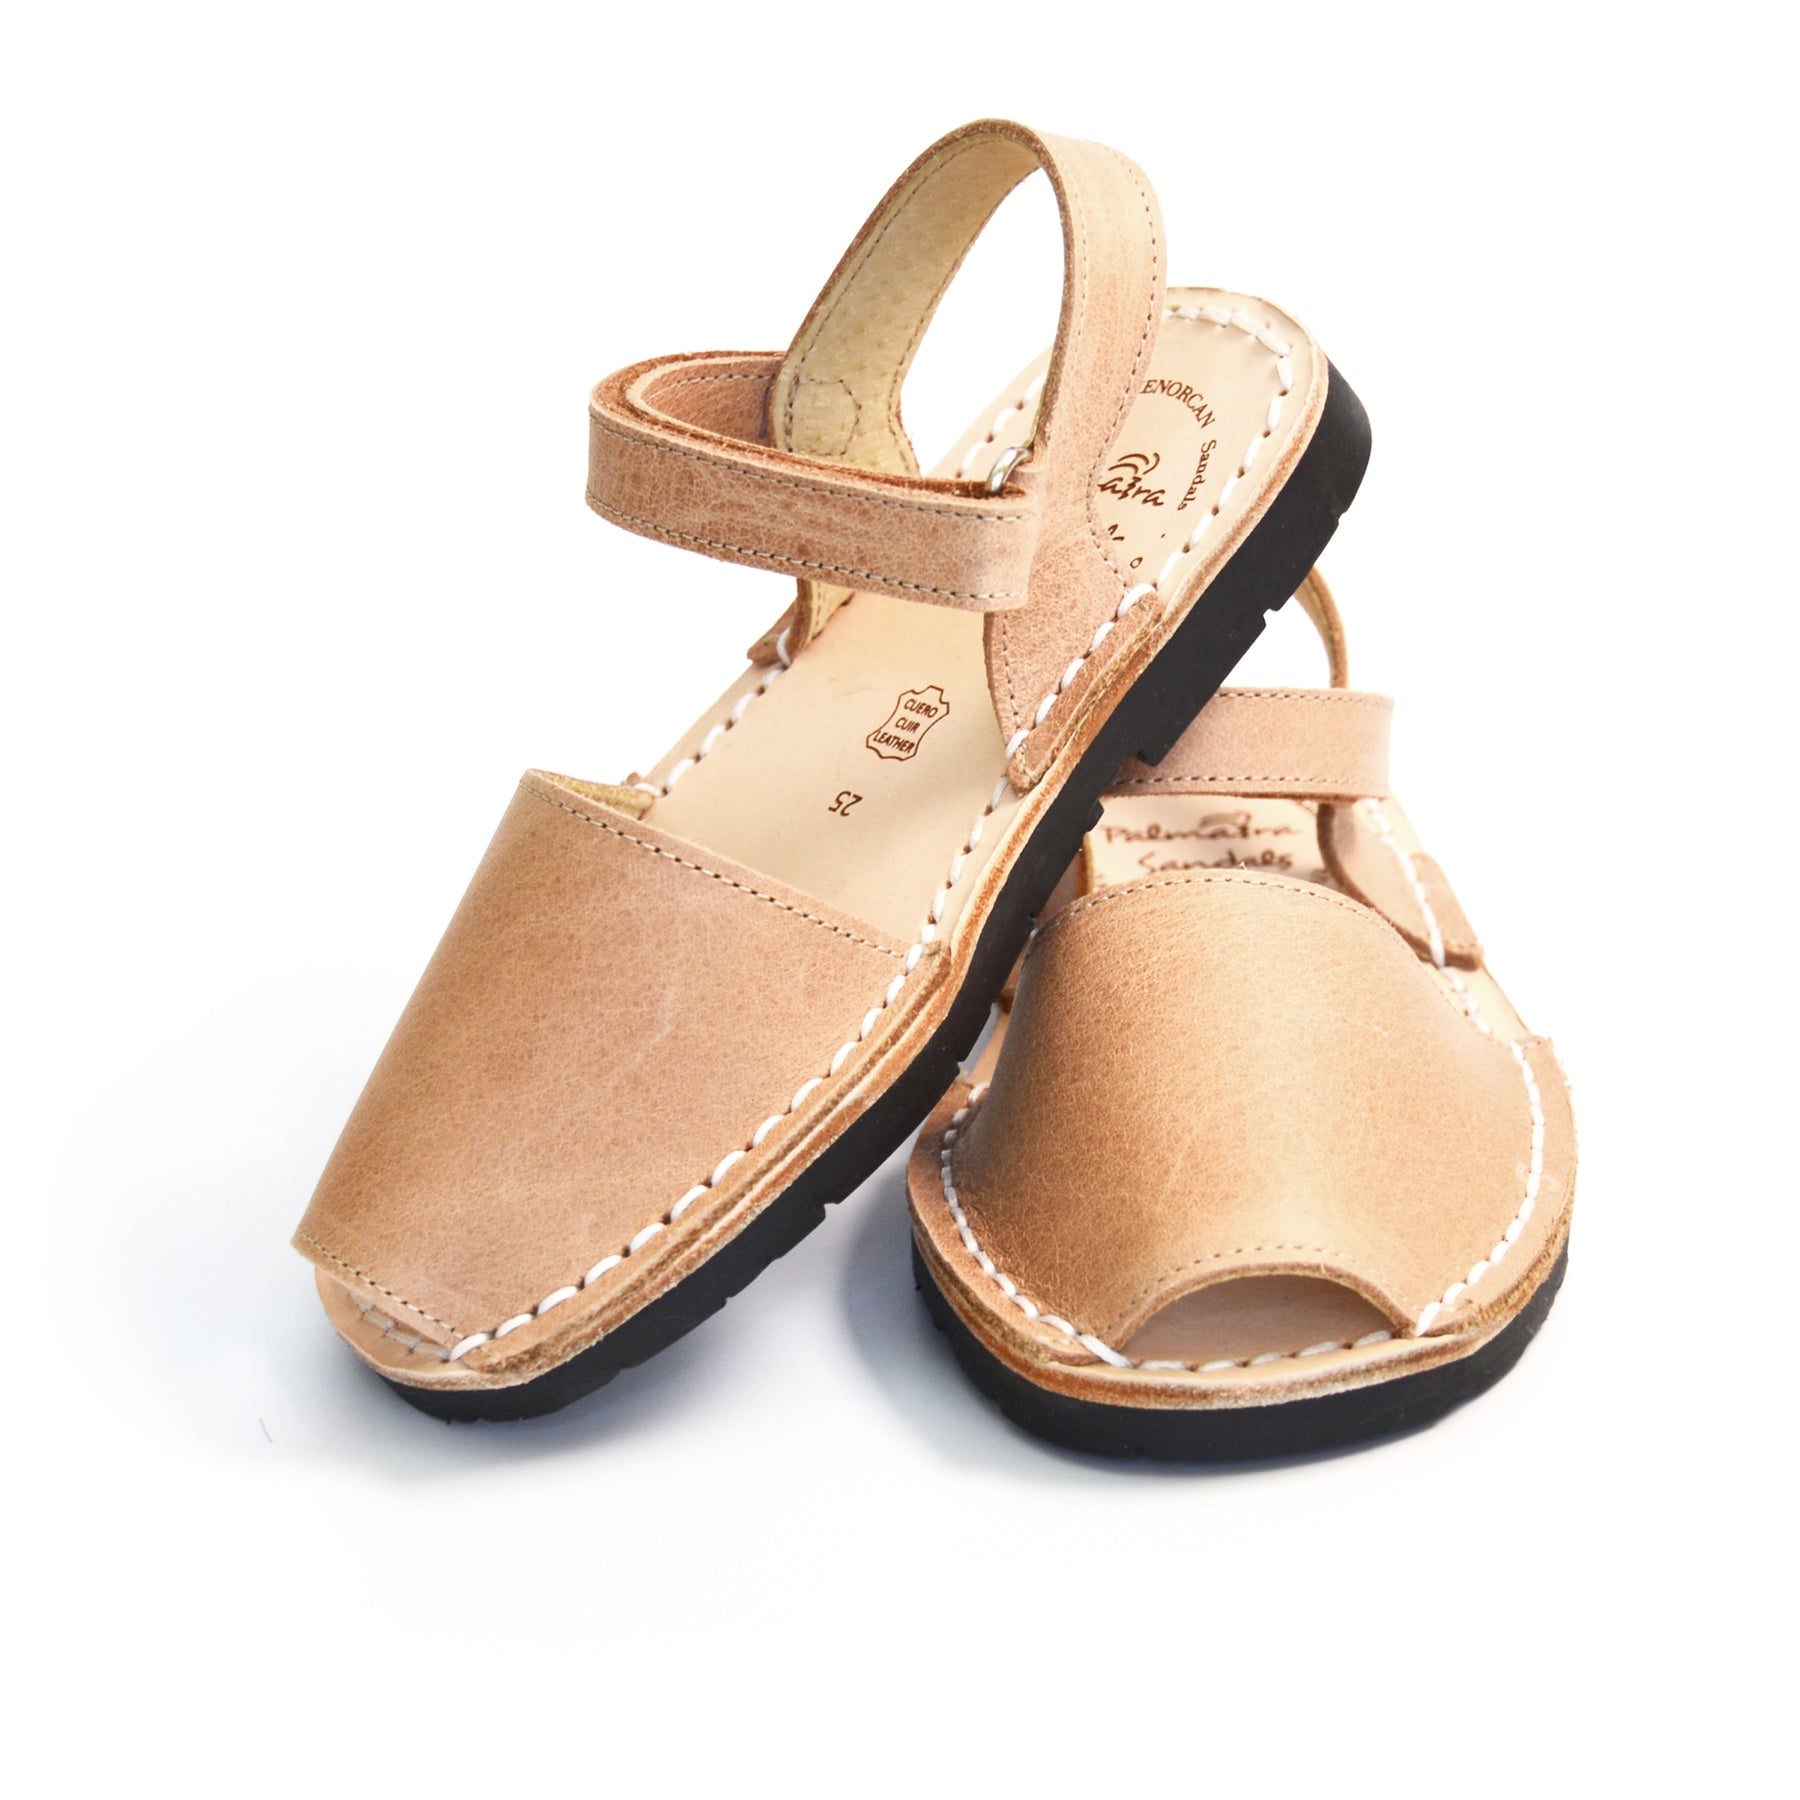 Tan leather hook and loop kids spanish menorcan avarcas sandals